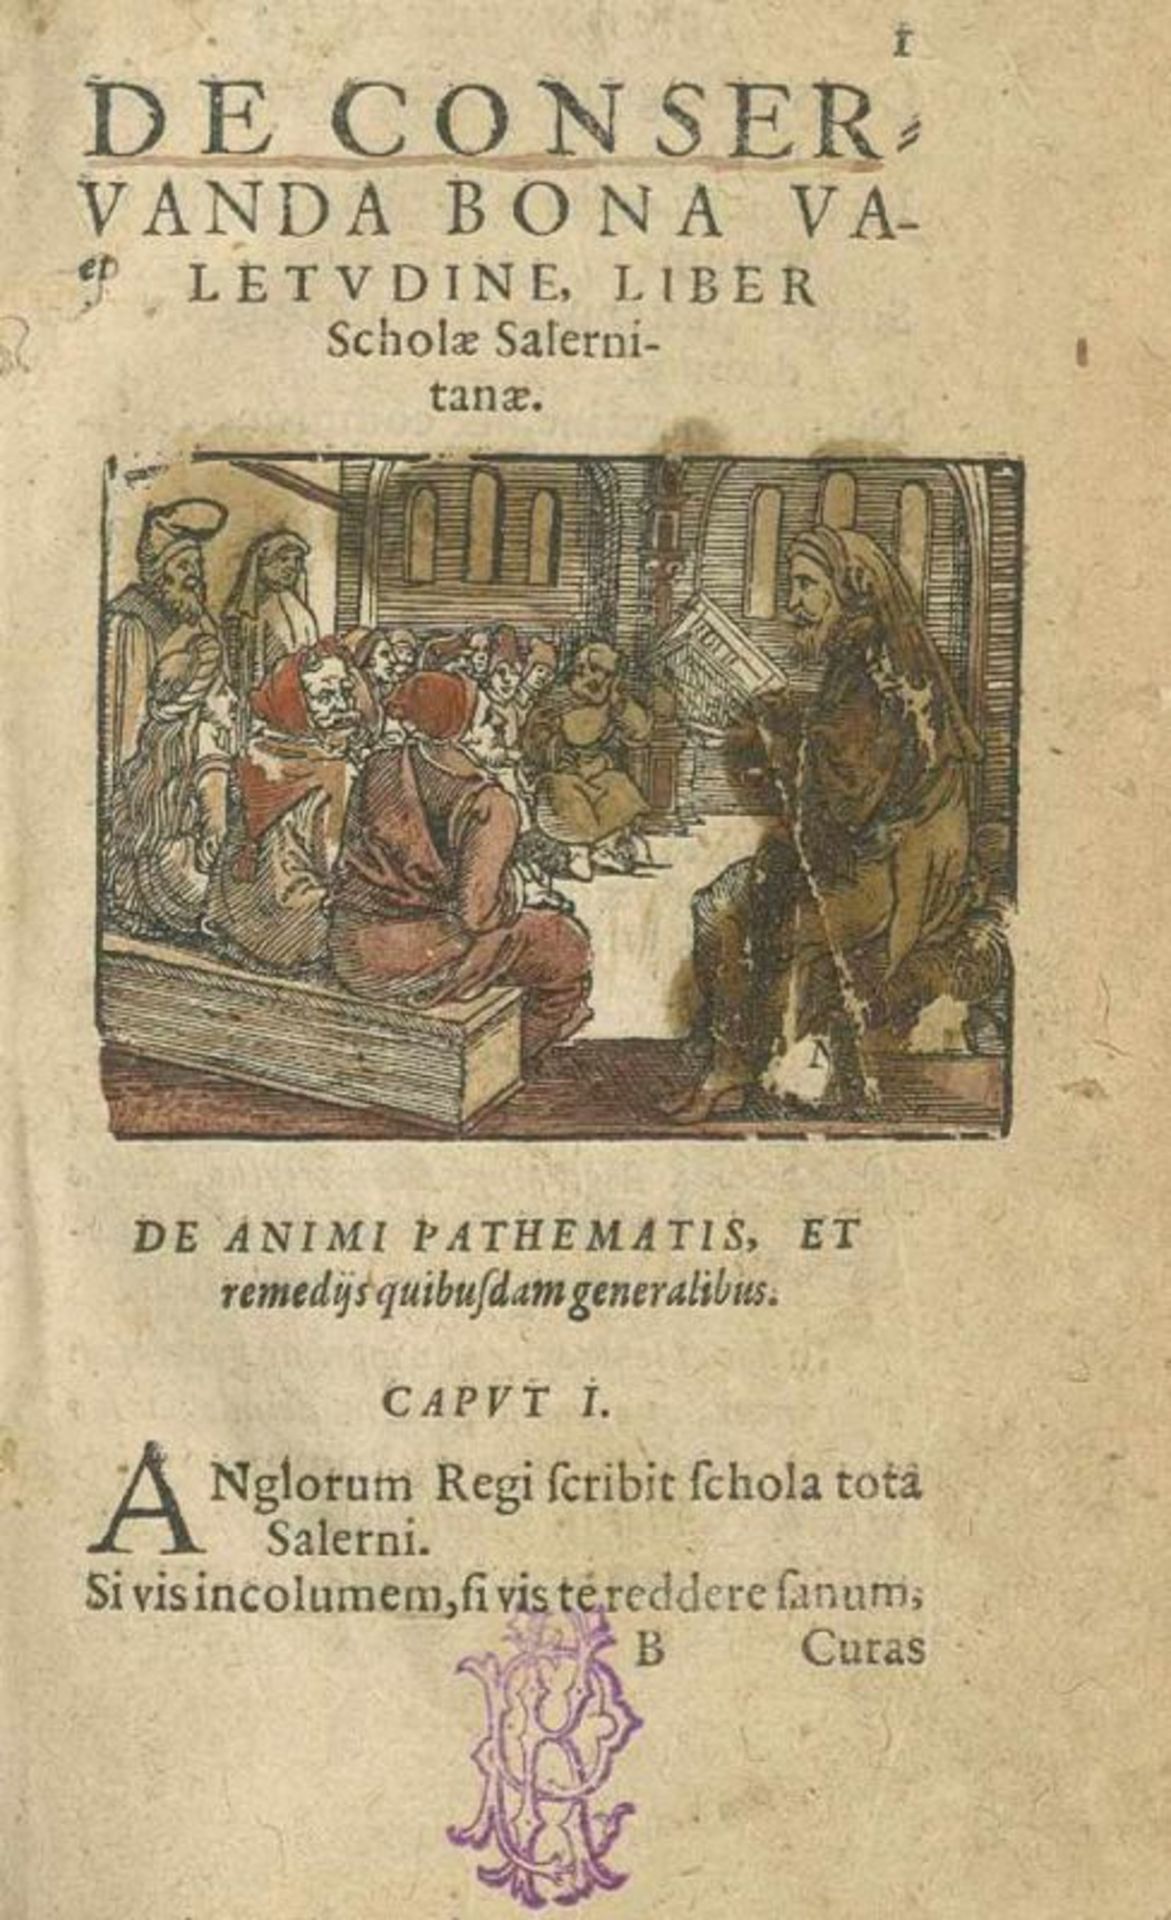 (Curio,J.De conservanda bona valetudine. Opusculum Scholae Salernitanae ad regem Angliae, Germanicis